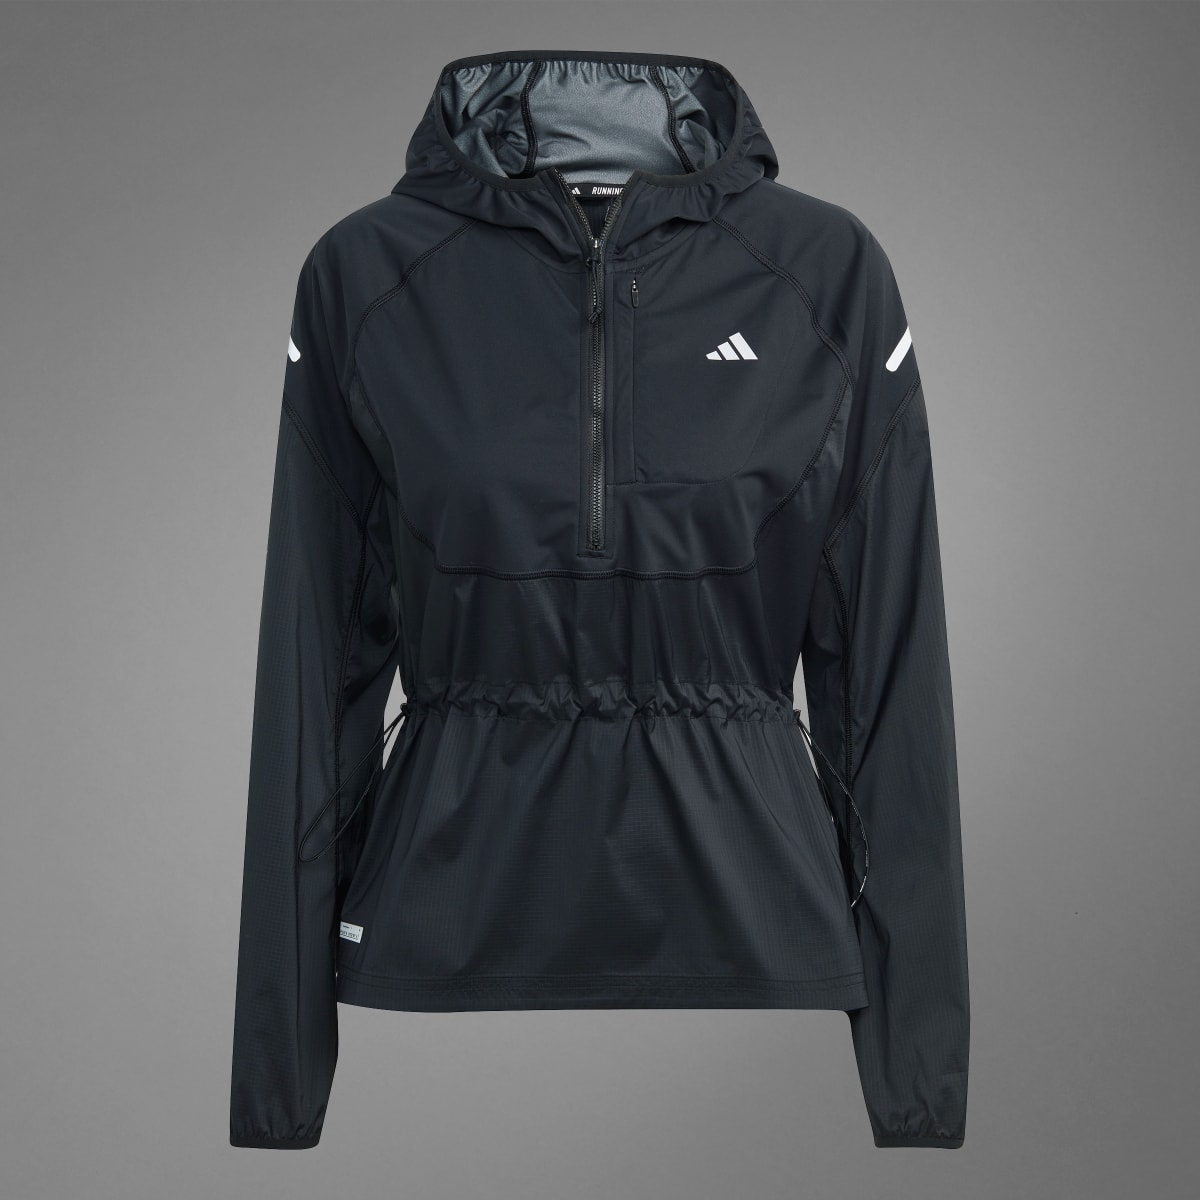 Adidas Ultimate Jacket. 10